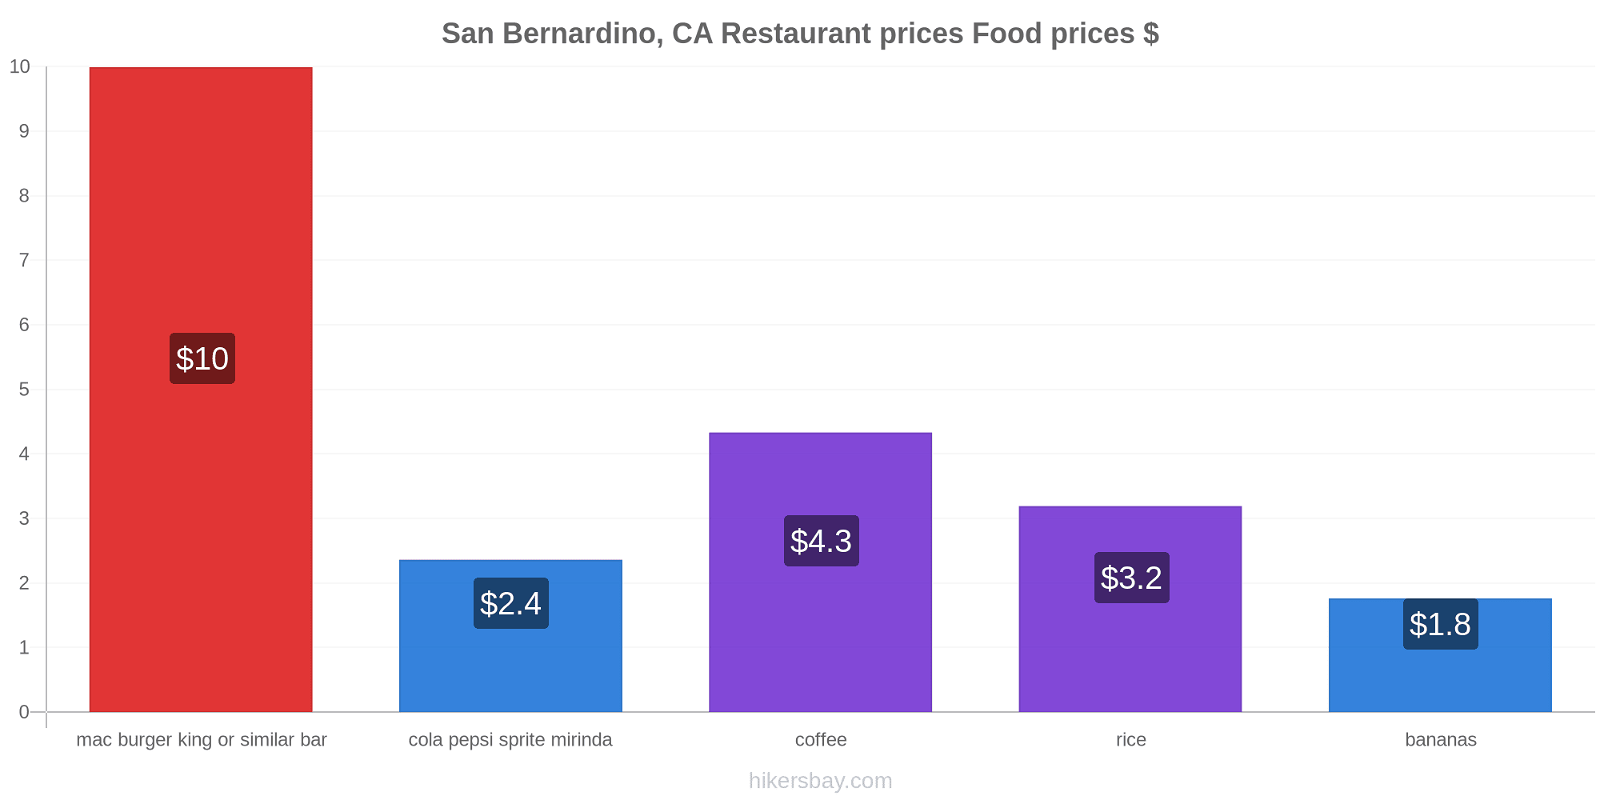 San Bernardino, CA price changes hikersbay.com